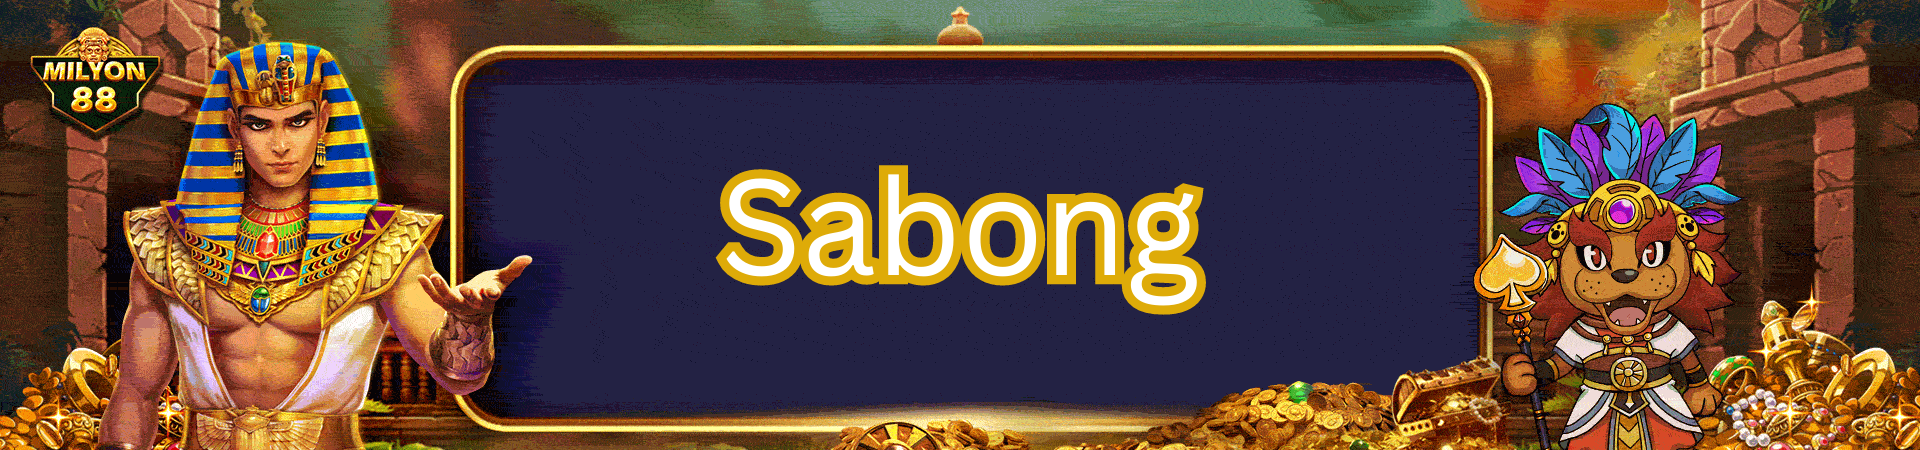 Milyon88 - Sabong - milyon88a.com